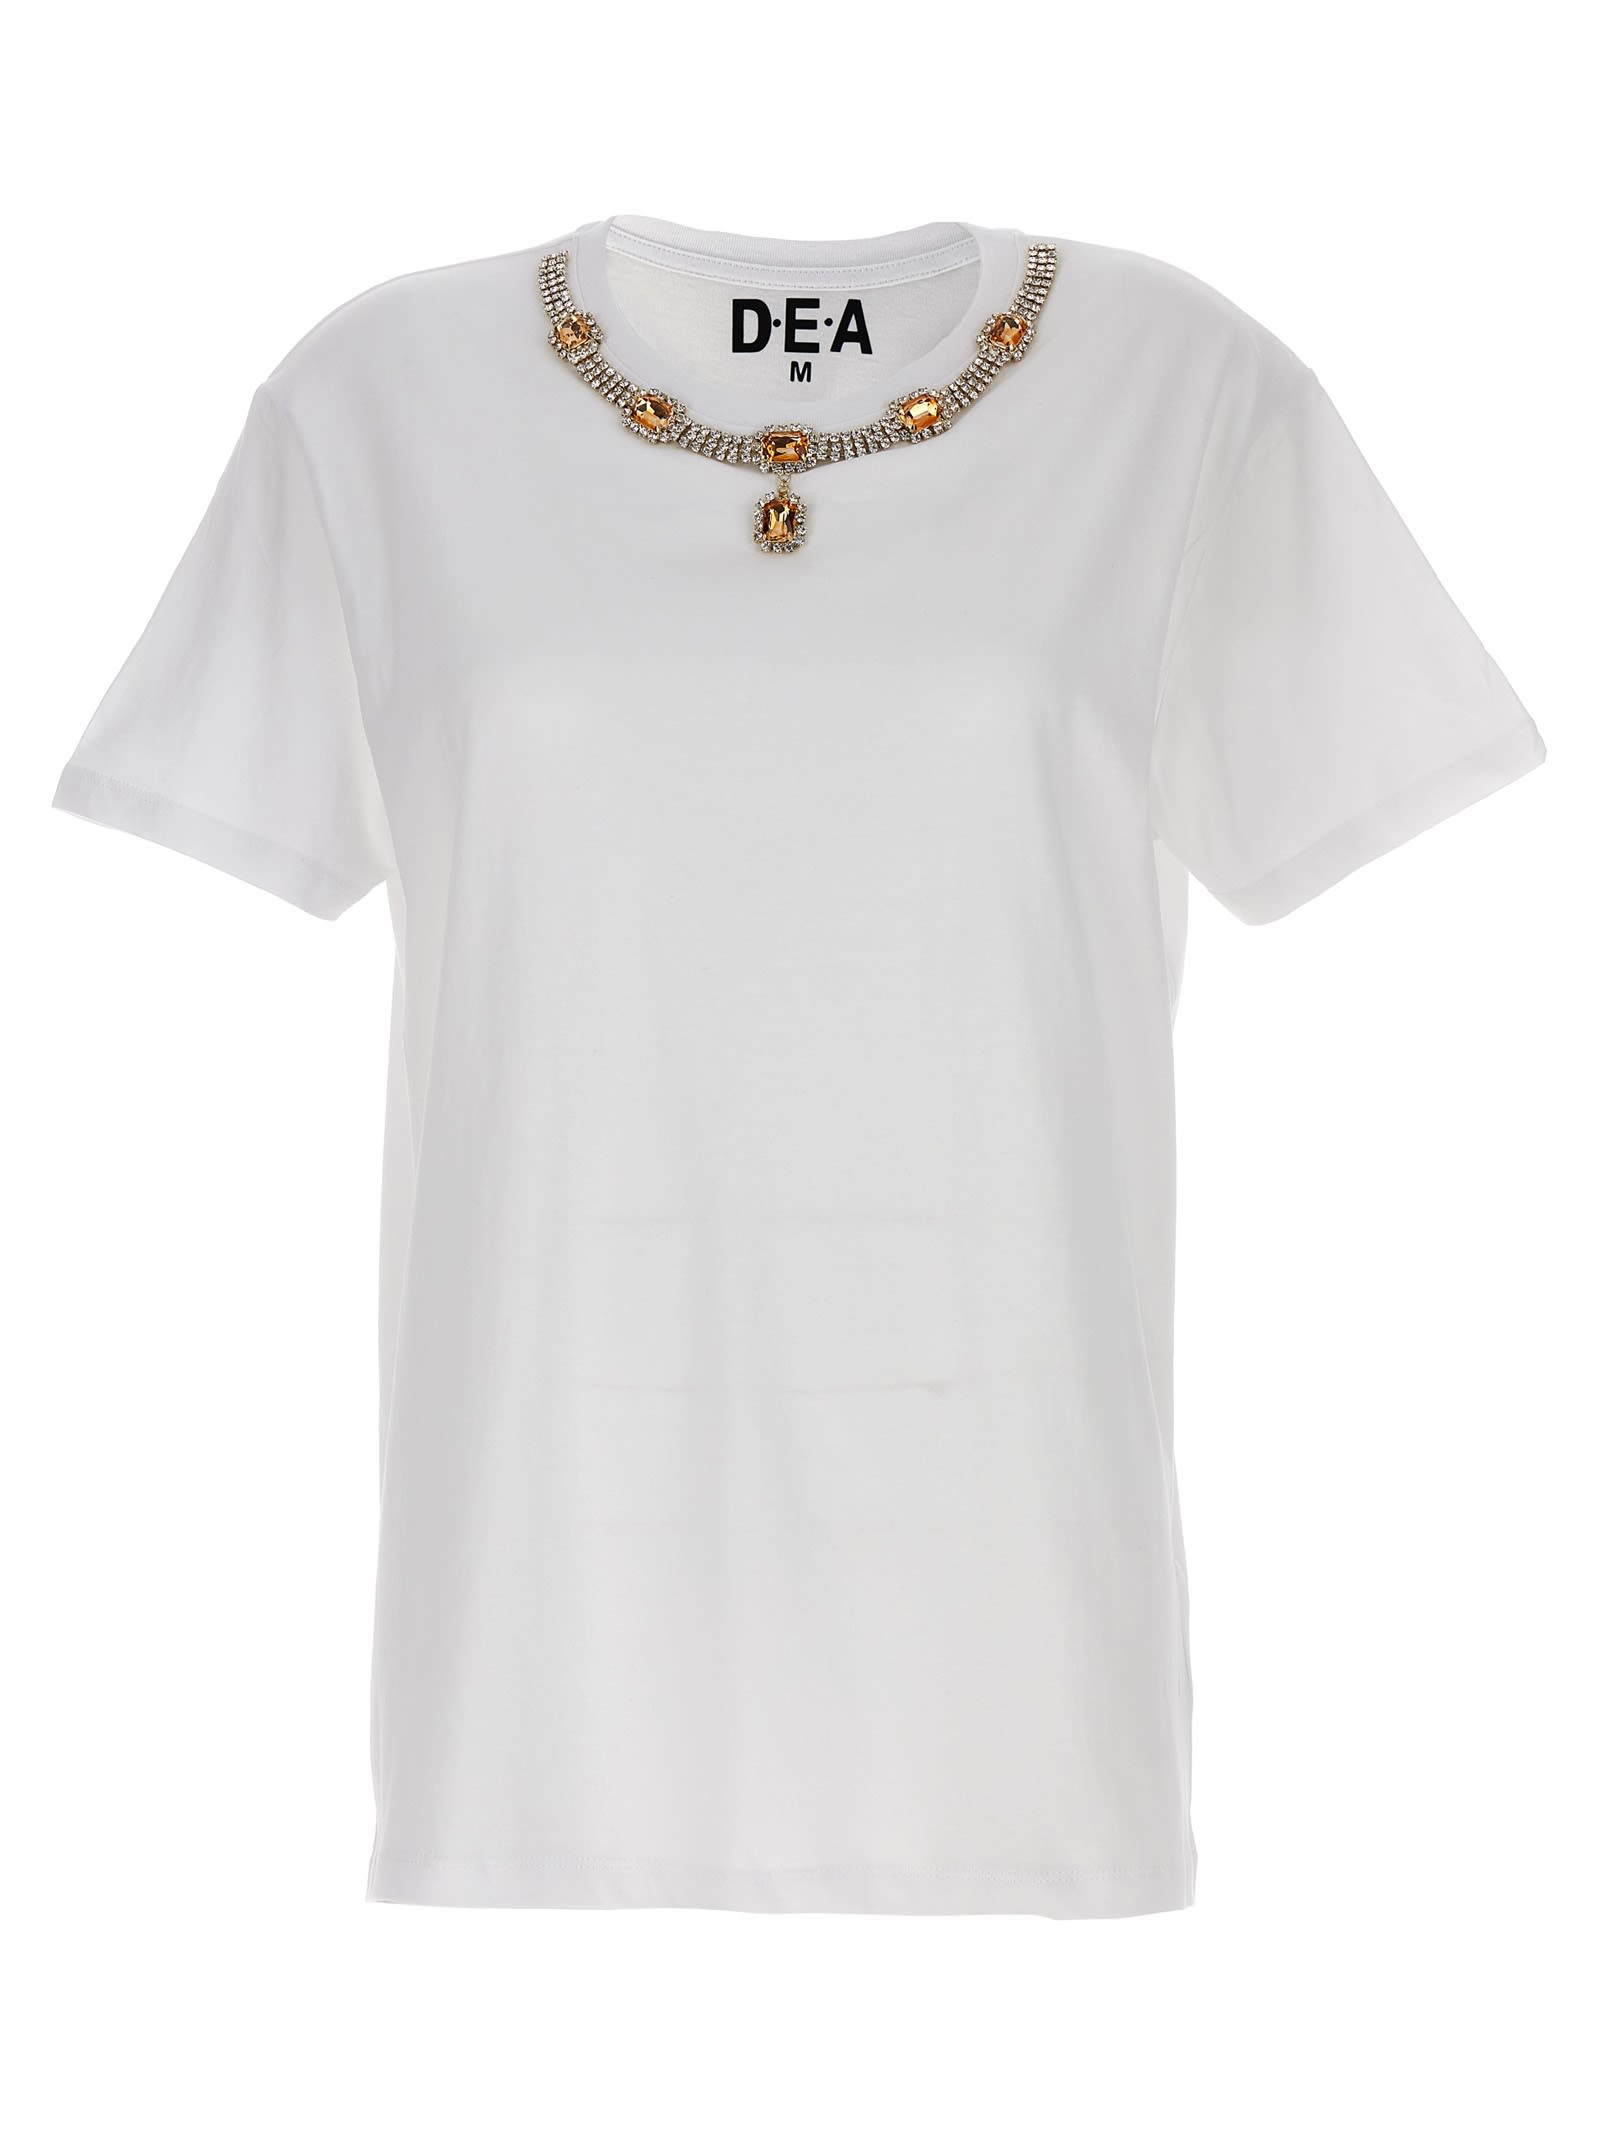 DEA Jewel T-shirt